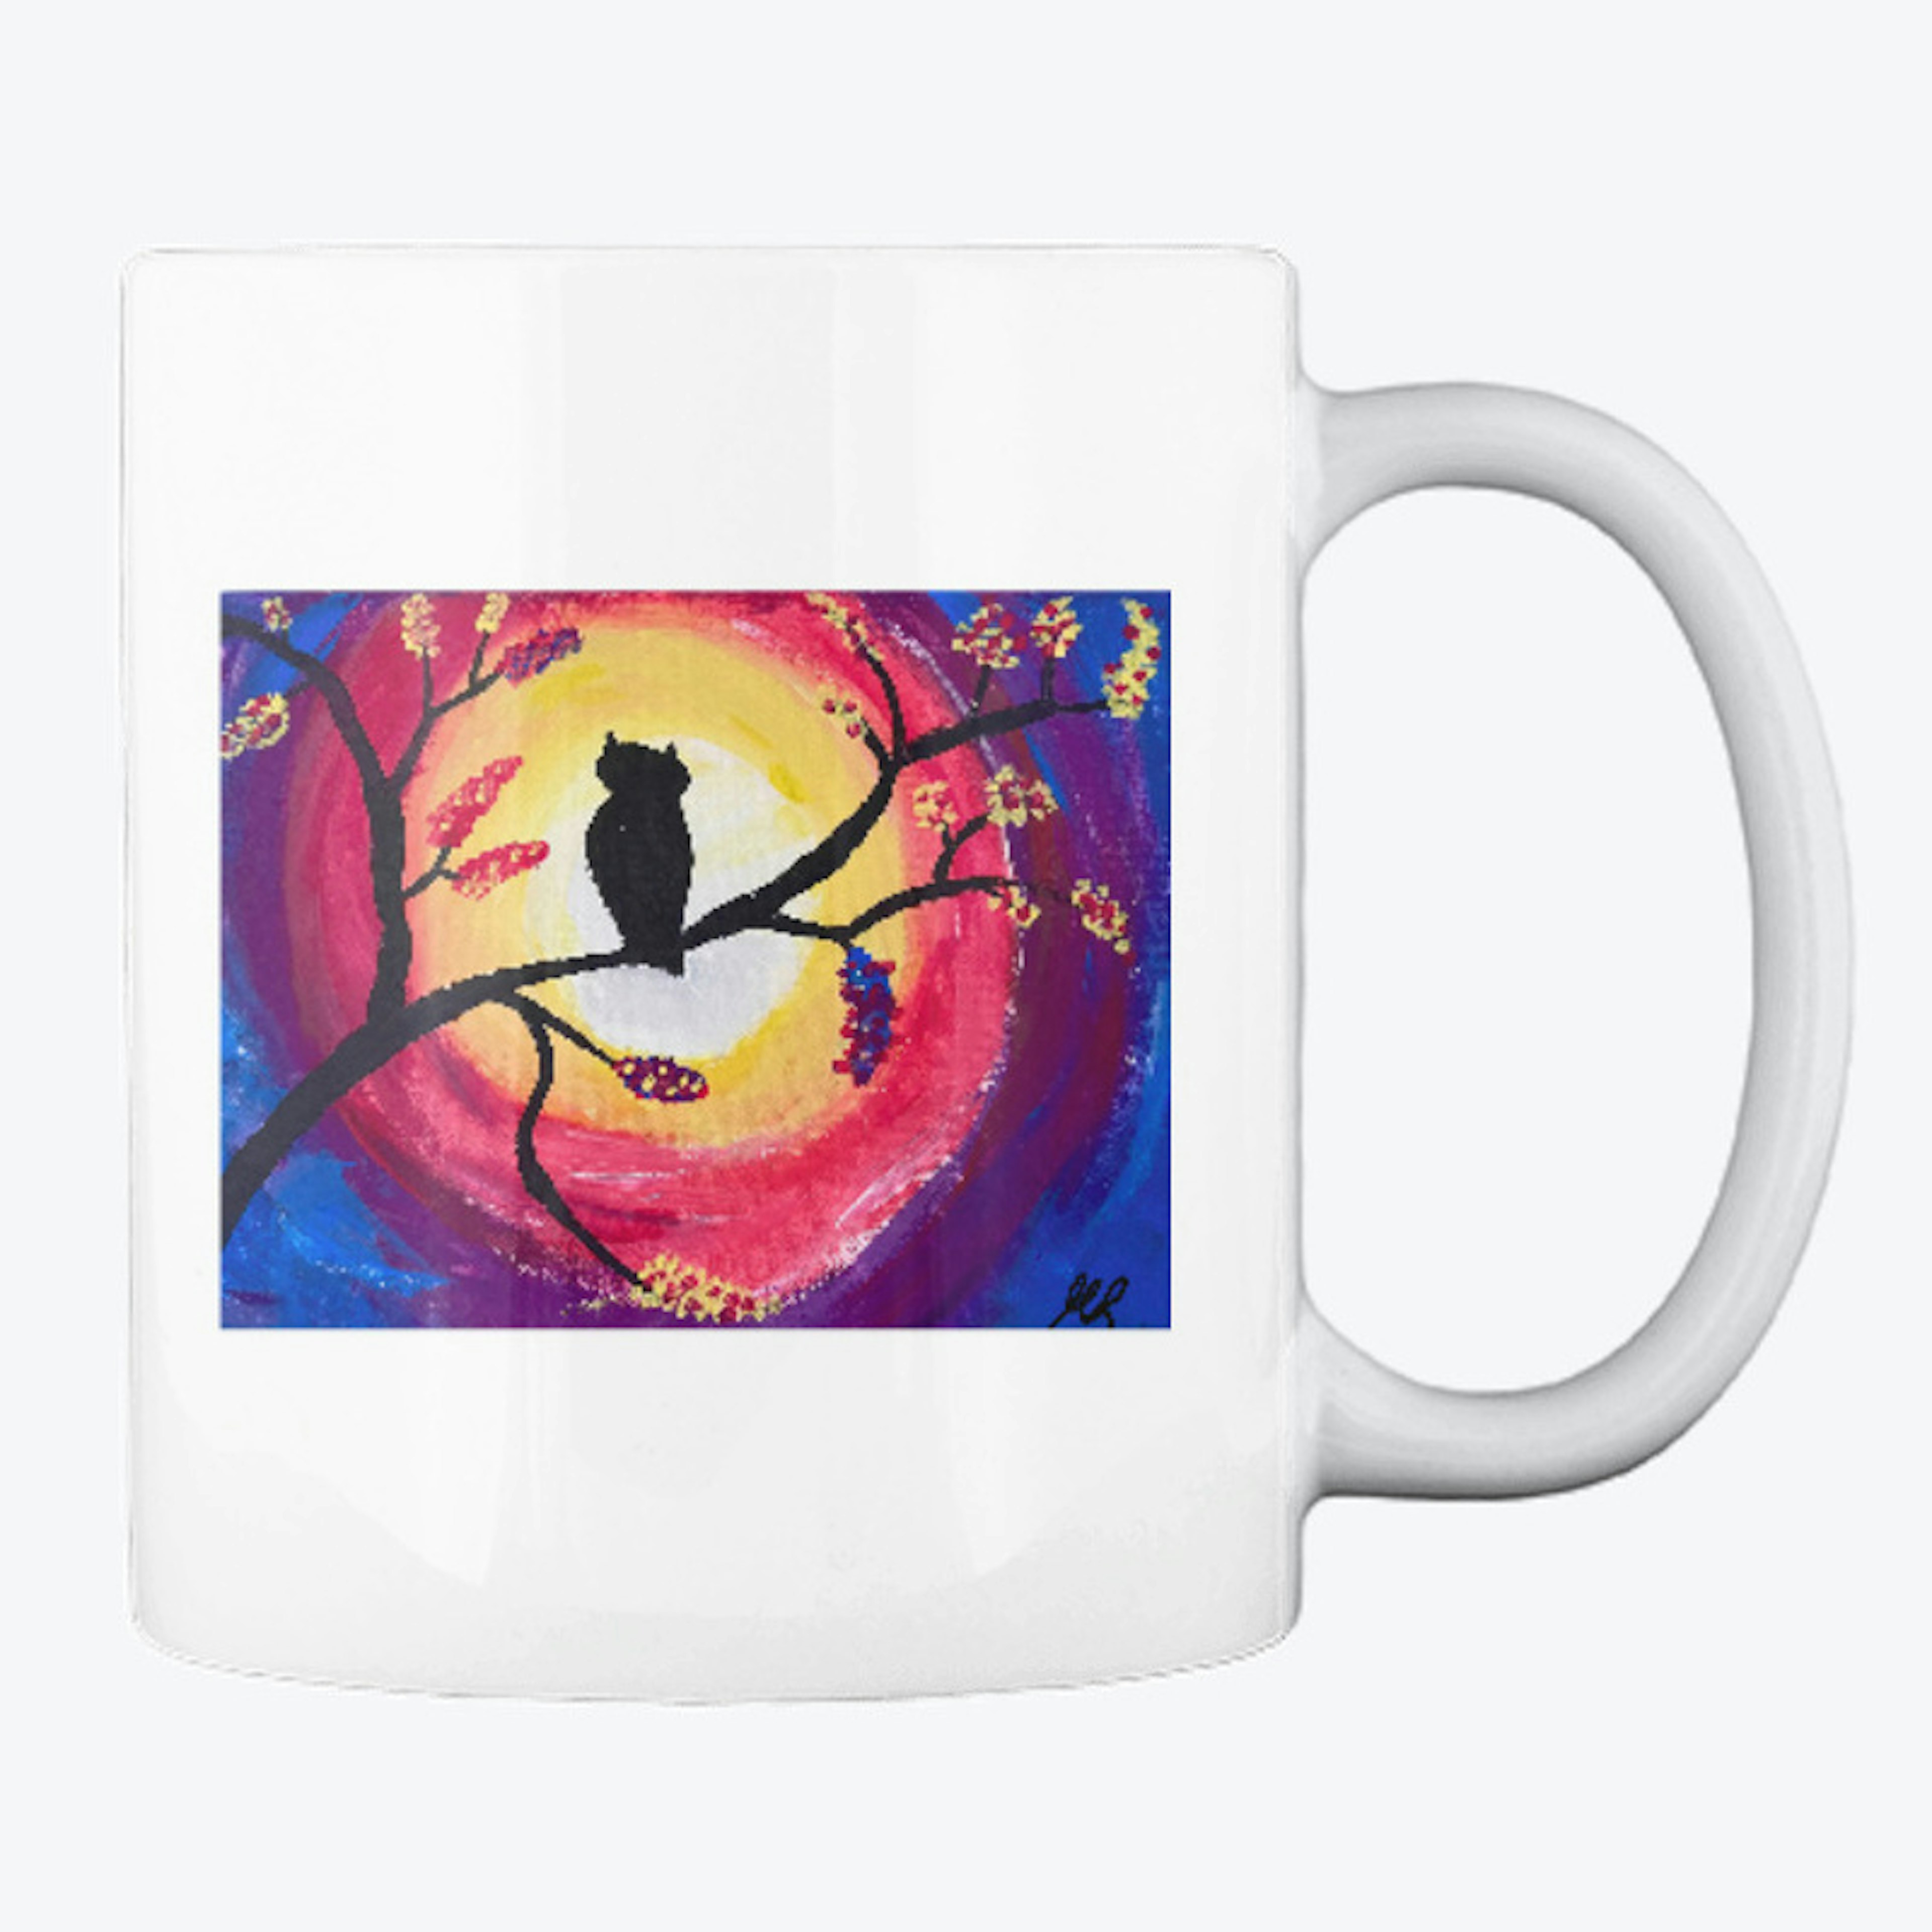 OWL Coffee Mug - Fundraiser Item